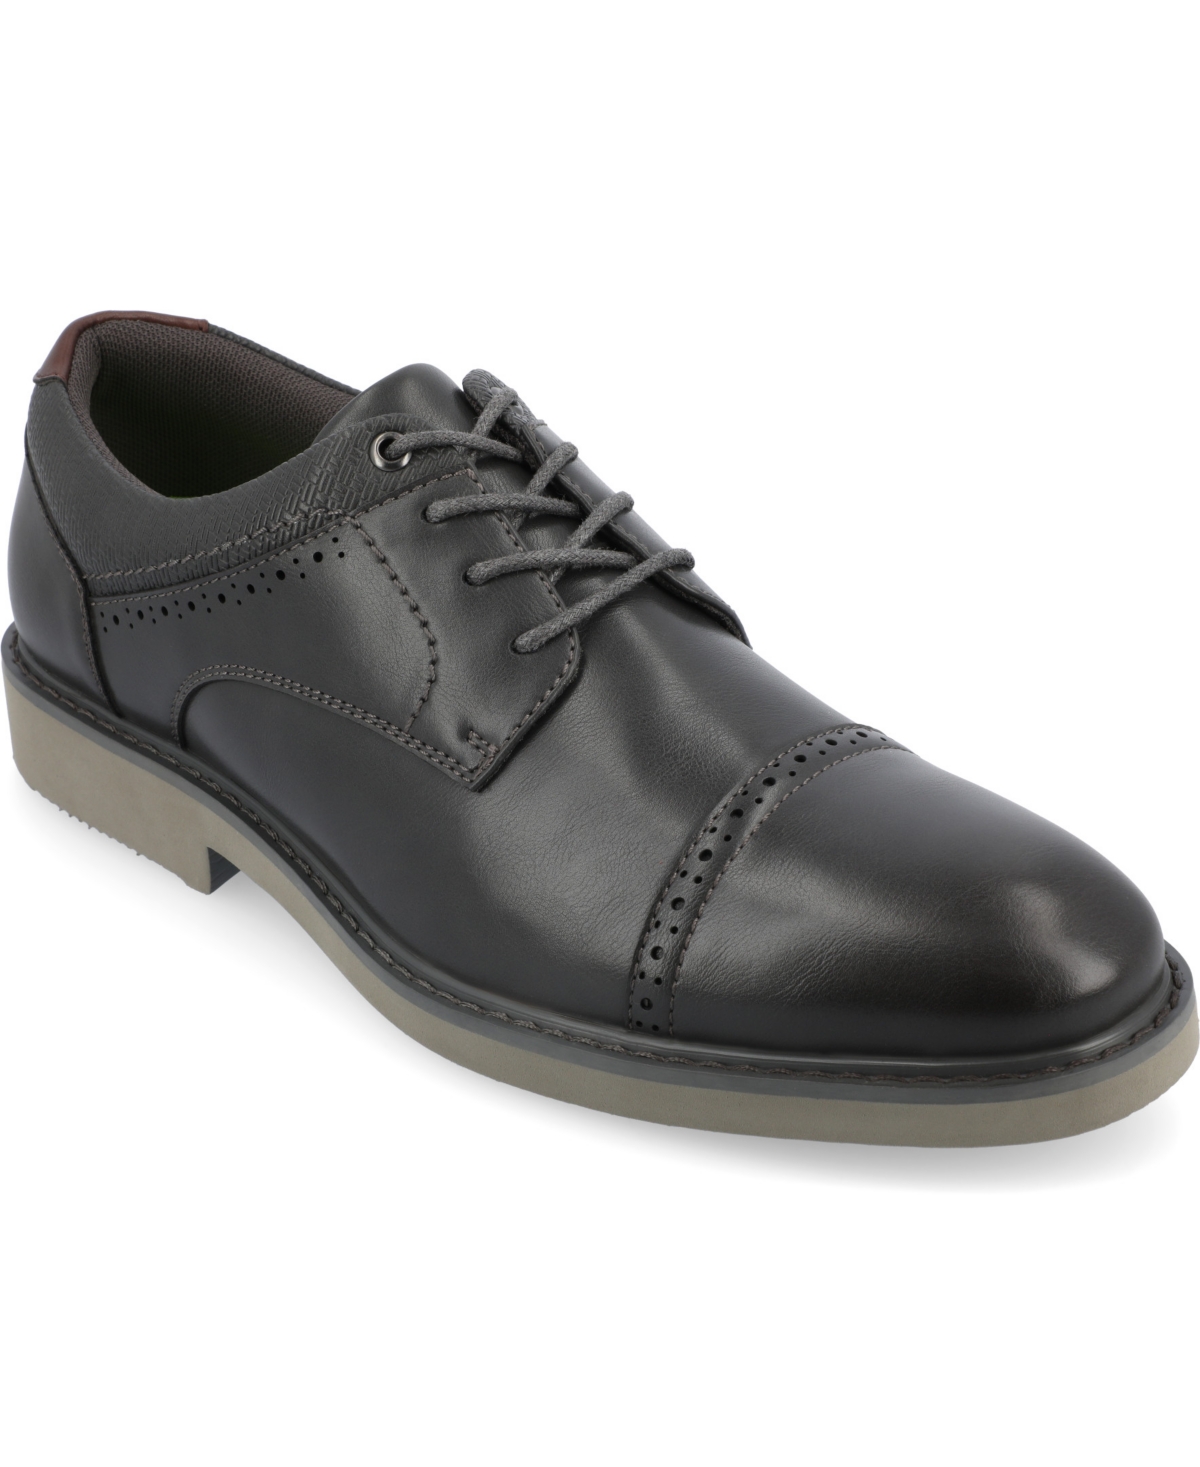 Men's Dexter Tru Comfort Foam Cap Toe Lace-Up Derby Shoes - Gray